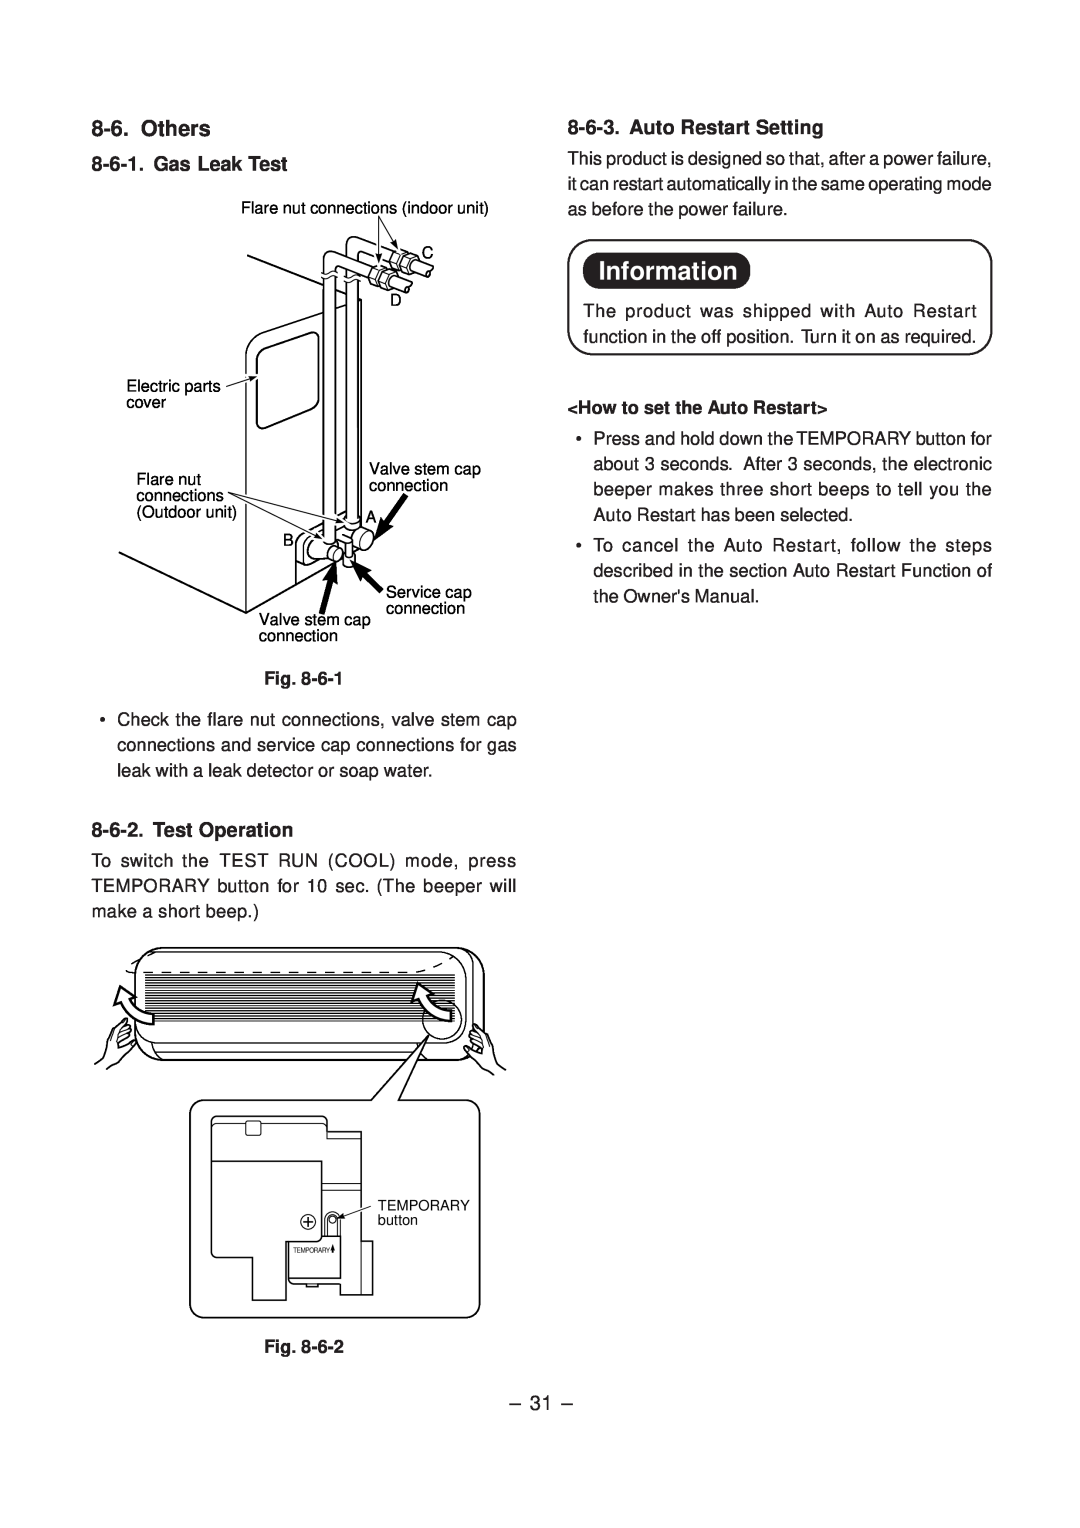 Toshiba RAS-10SA-E Information, Gas Leak Test, Test Operation, Auto Restart Setting, How to set the Auto Restart 